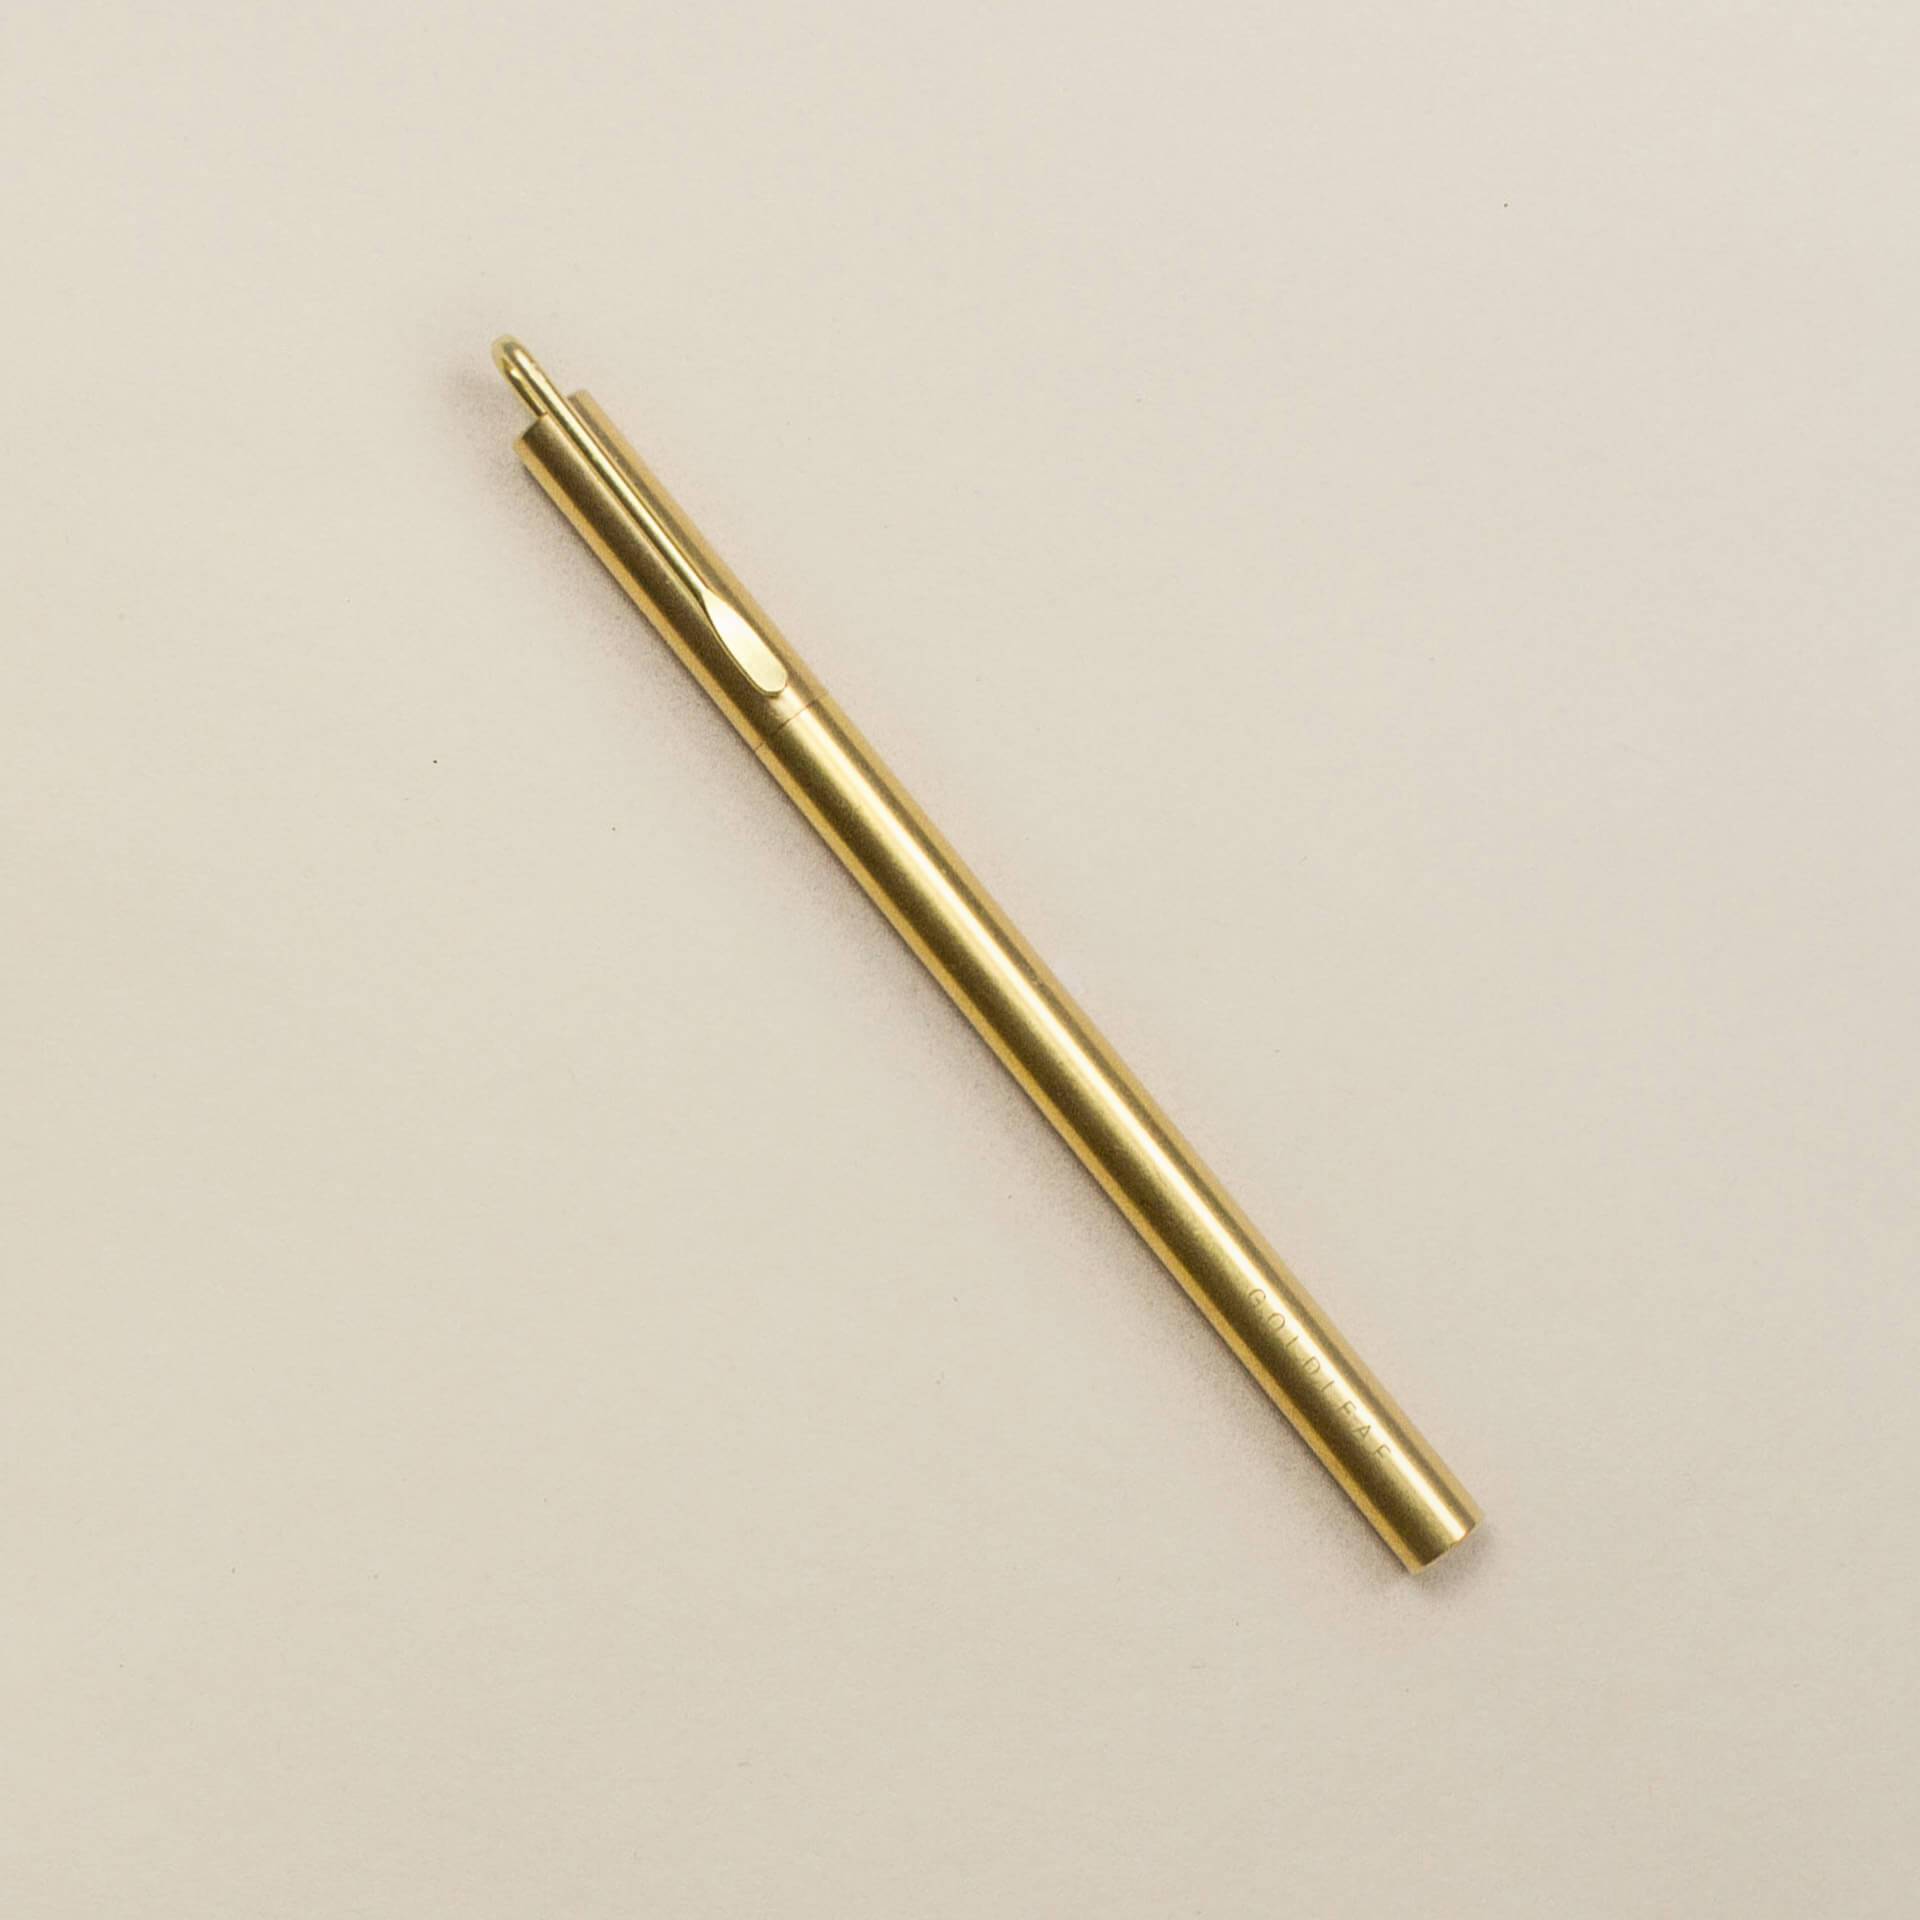 Gold Leaf Pen, Australia the Gift